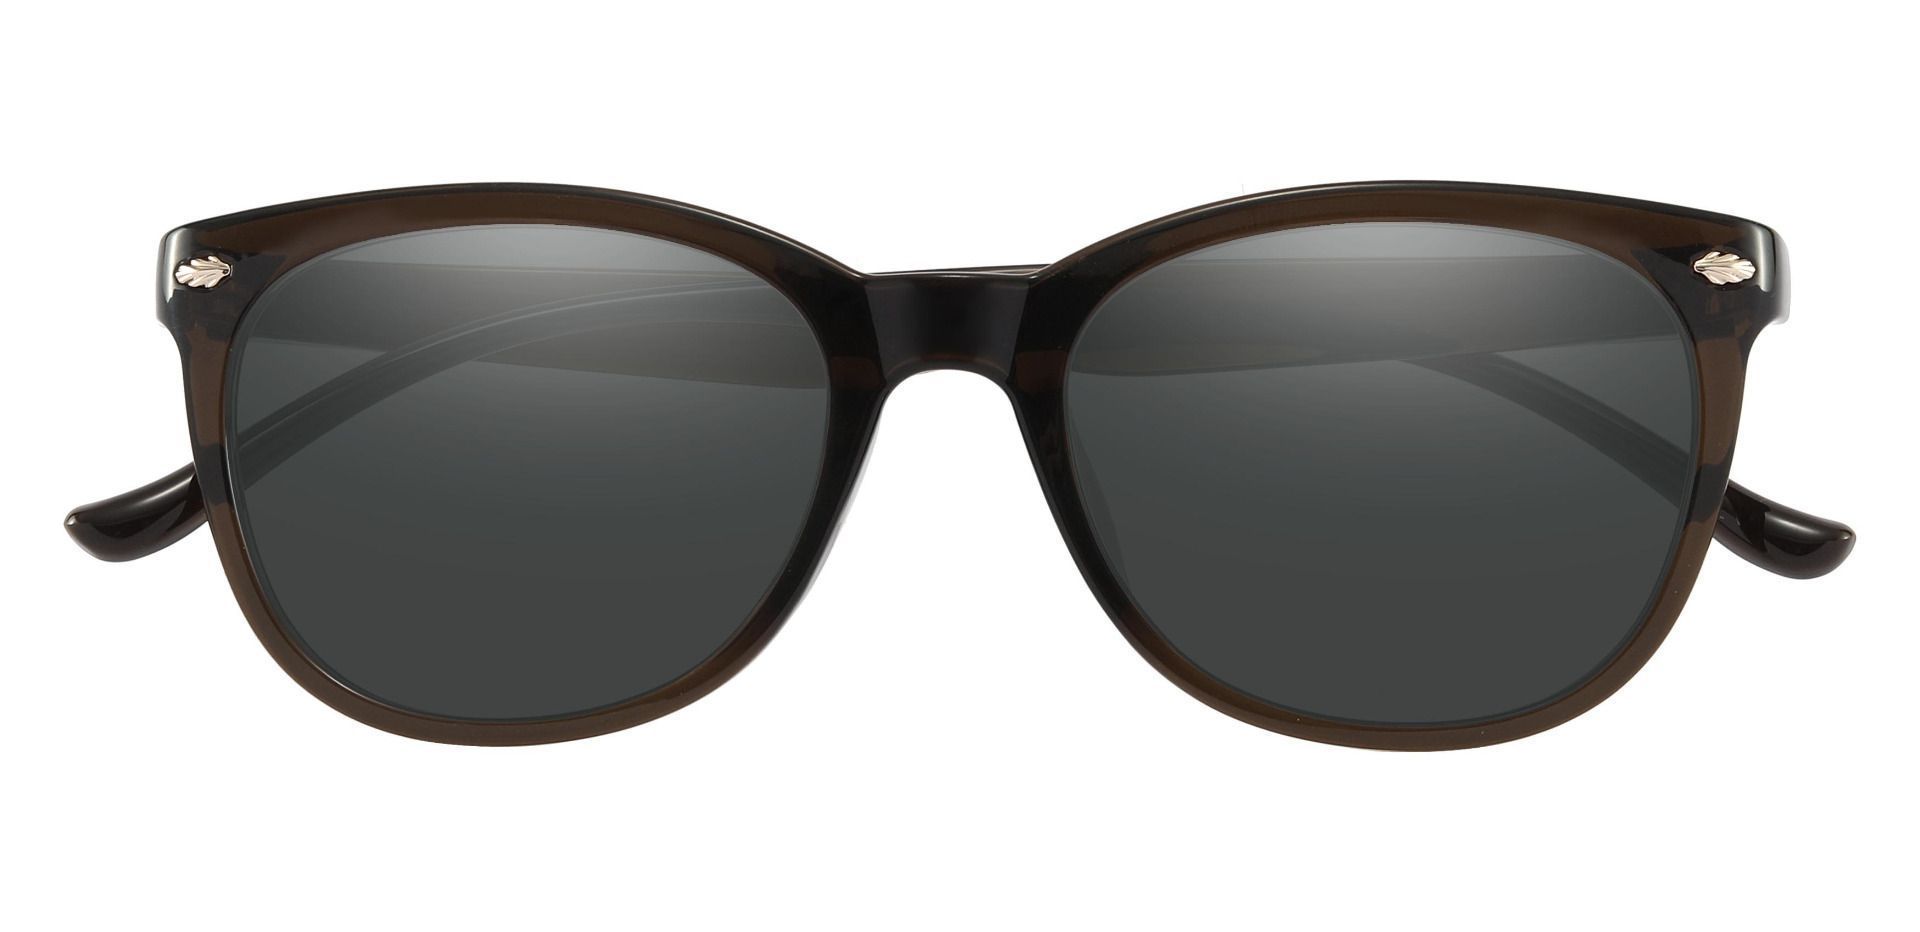 Pavilion Square Progressive Sunglasses - Brown Frame With Gray Lenses